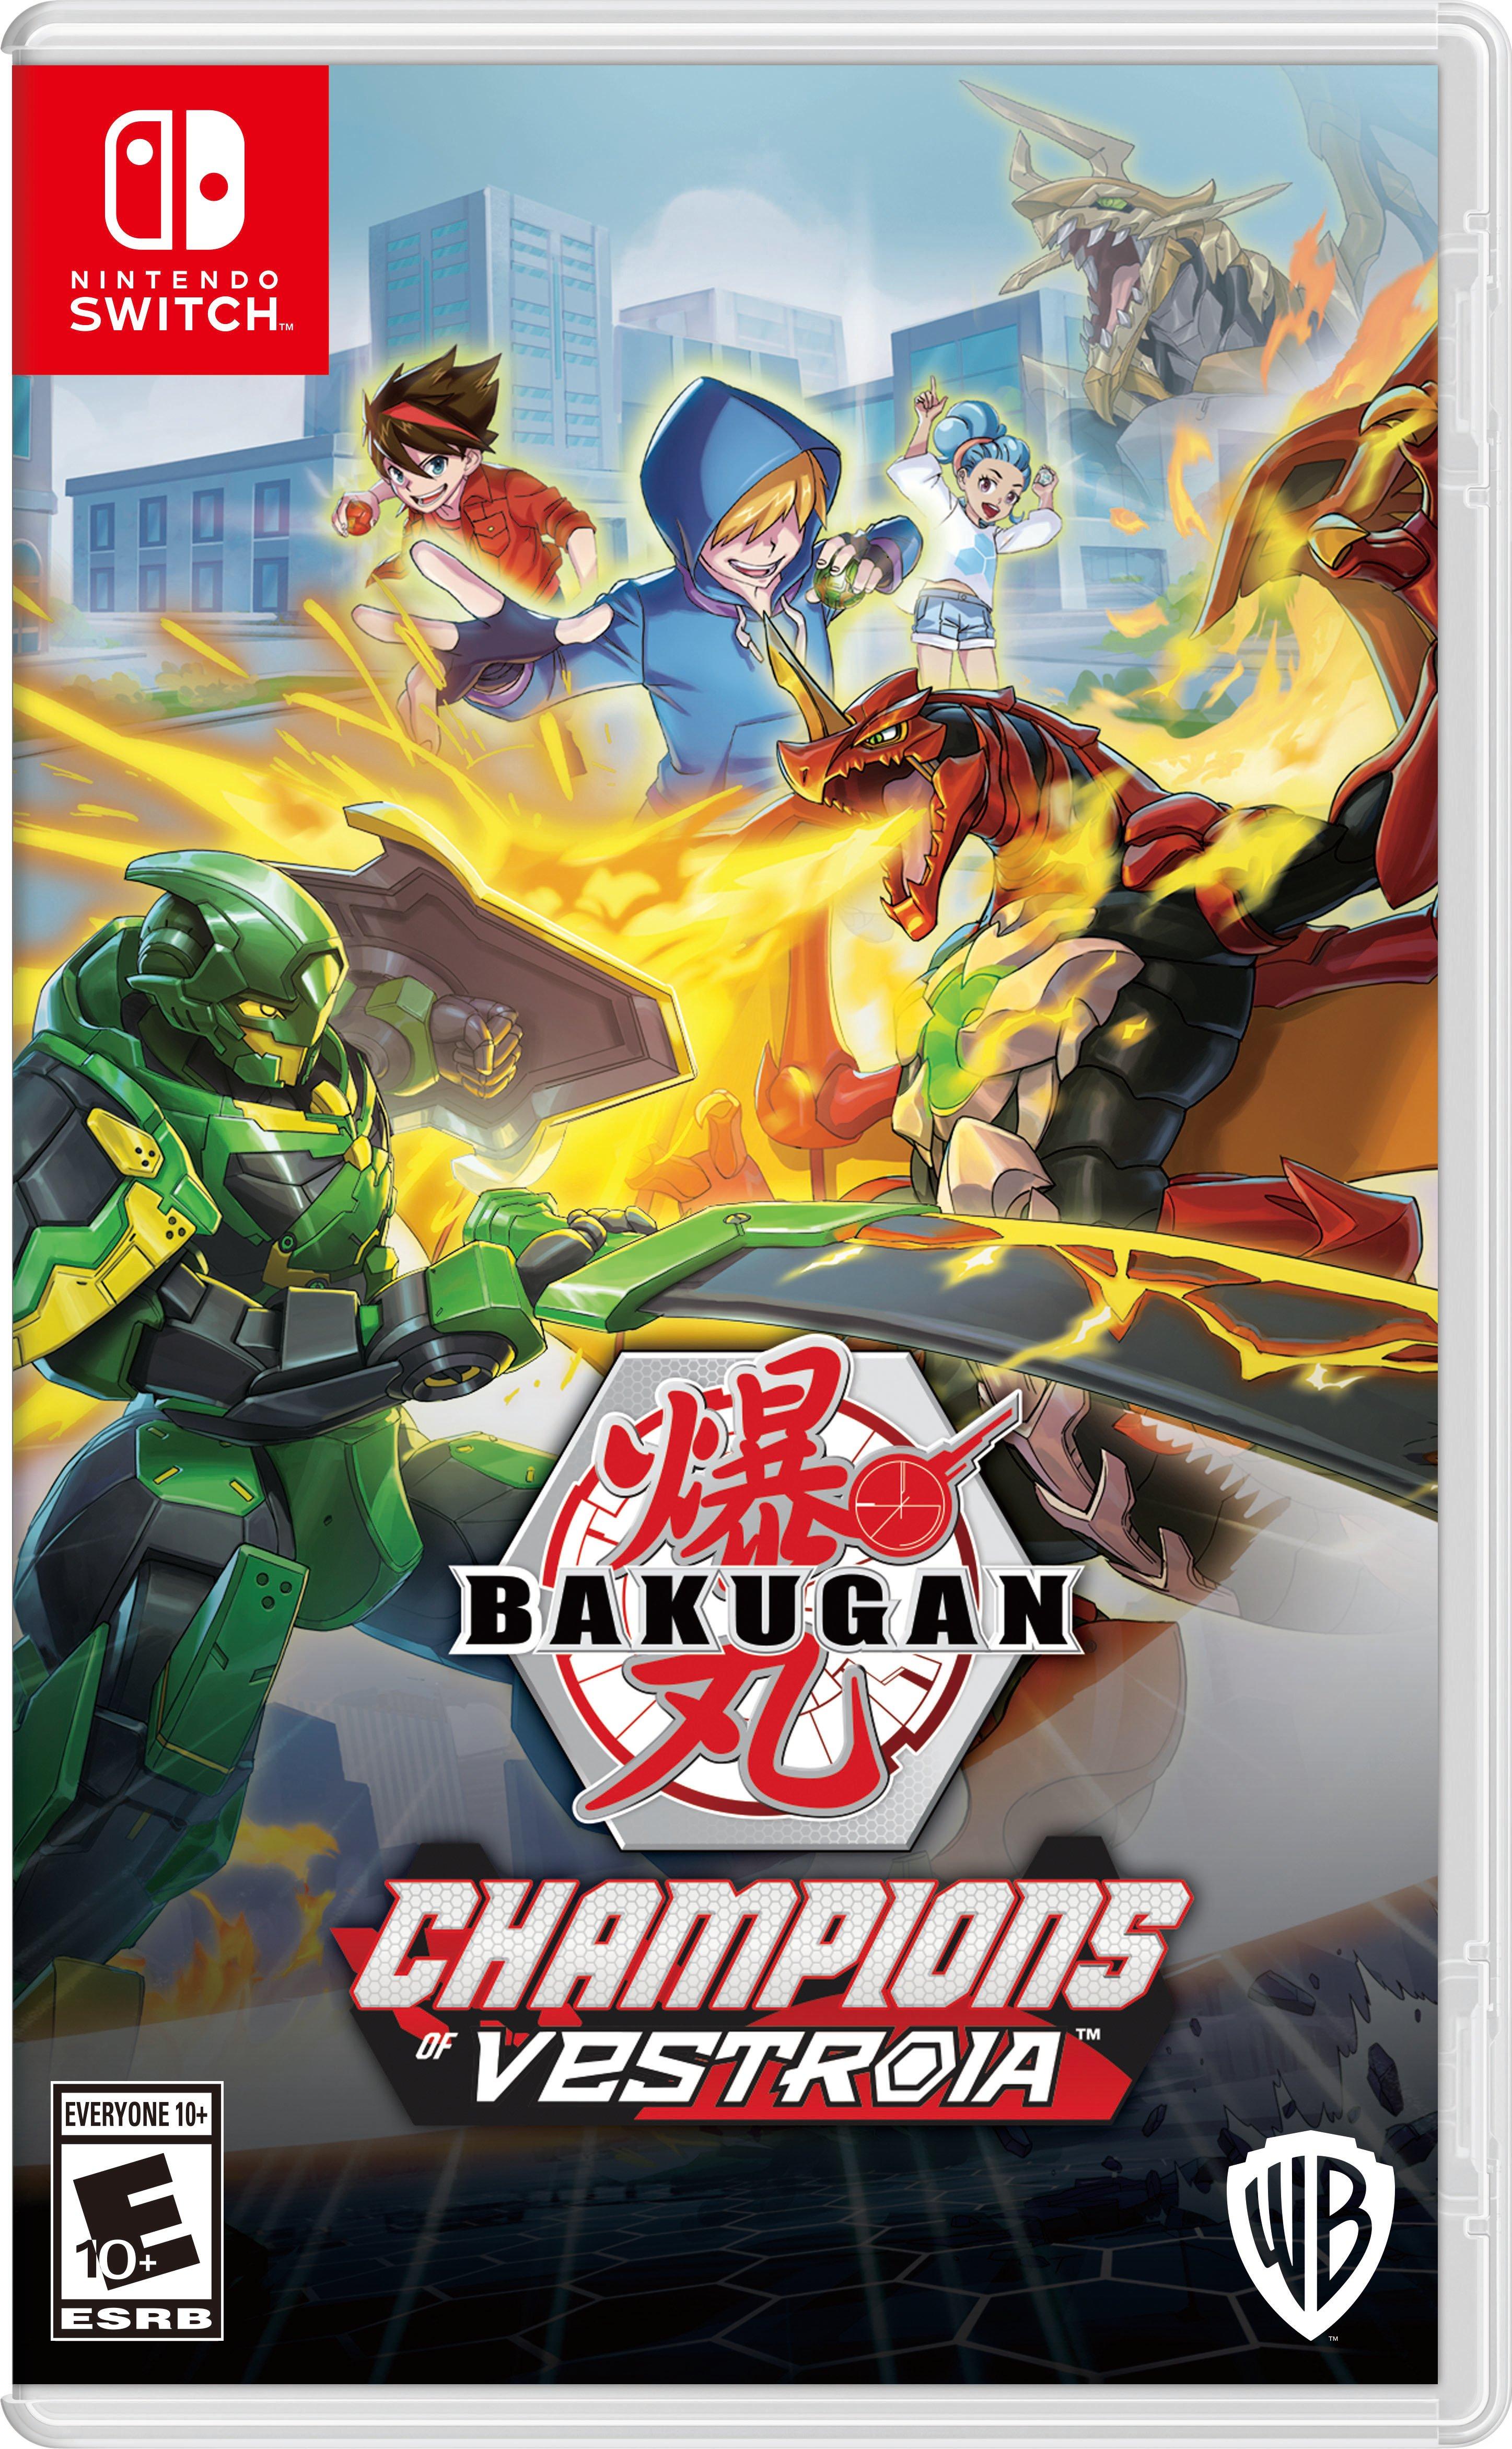 Bakugan Gameplay - First Look HD 